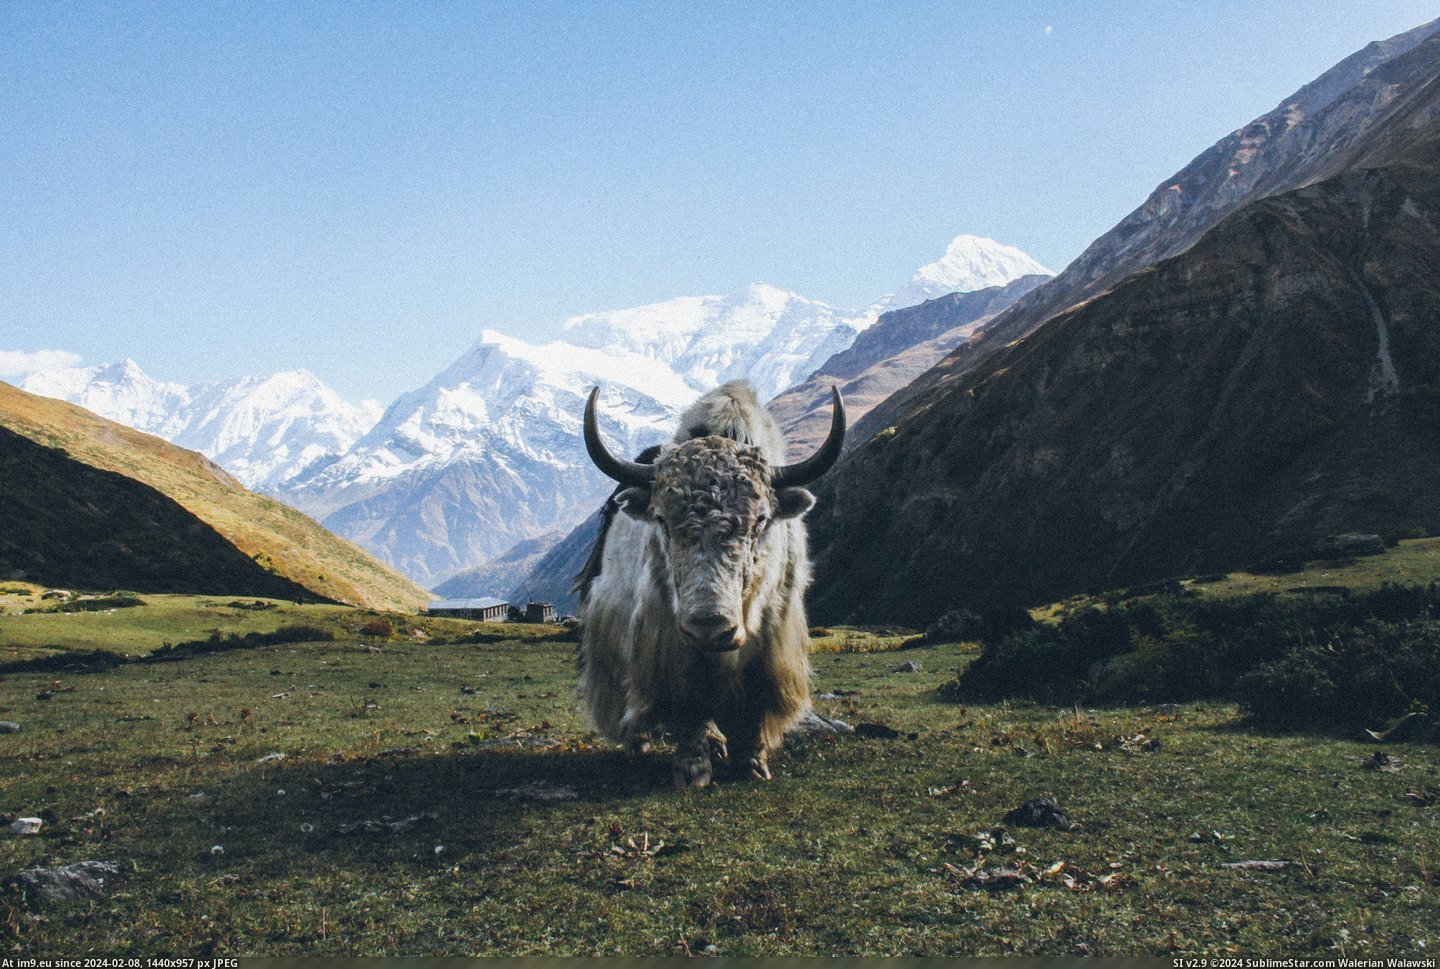  #Nepal  [Pics] A Yak in Nepal. Pic. (Bild von album My r/PICS favs))